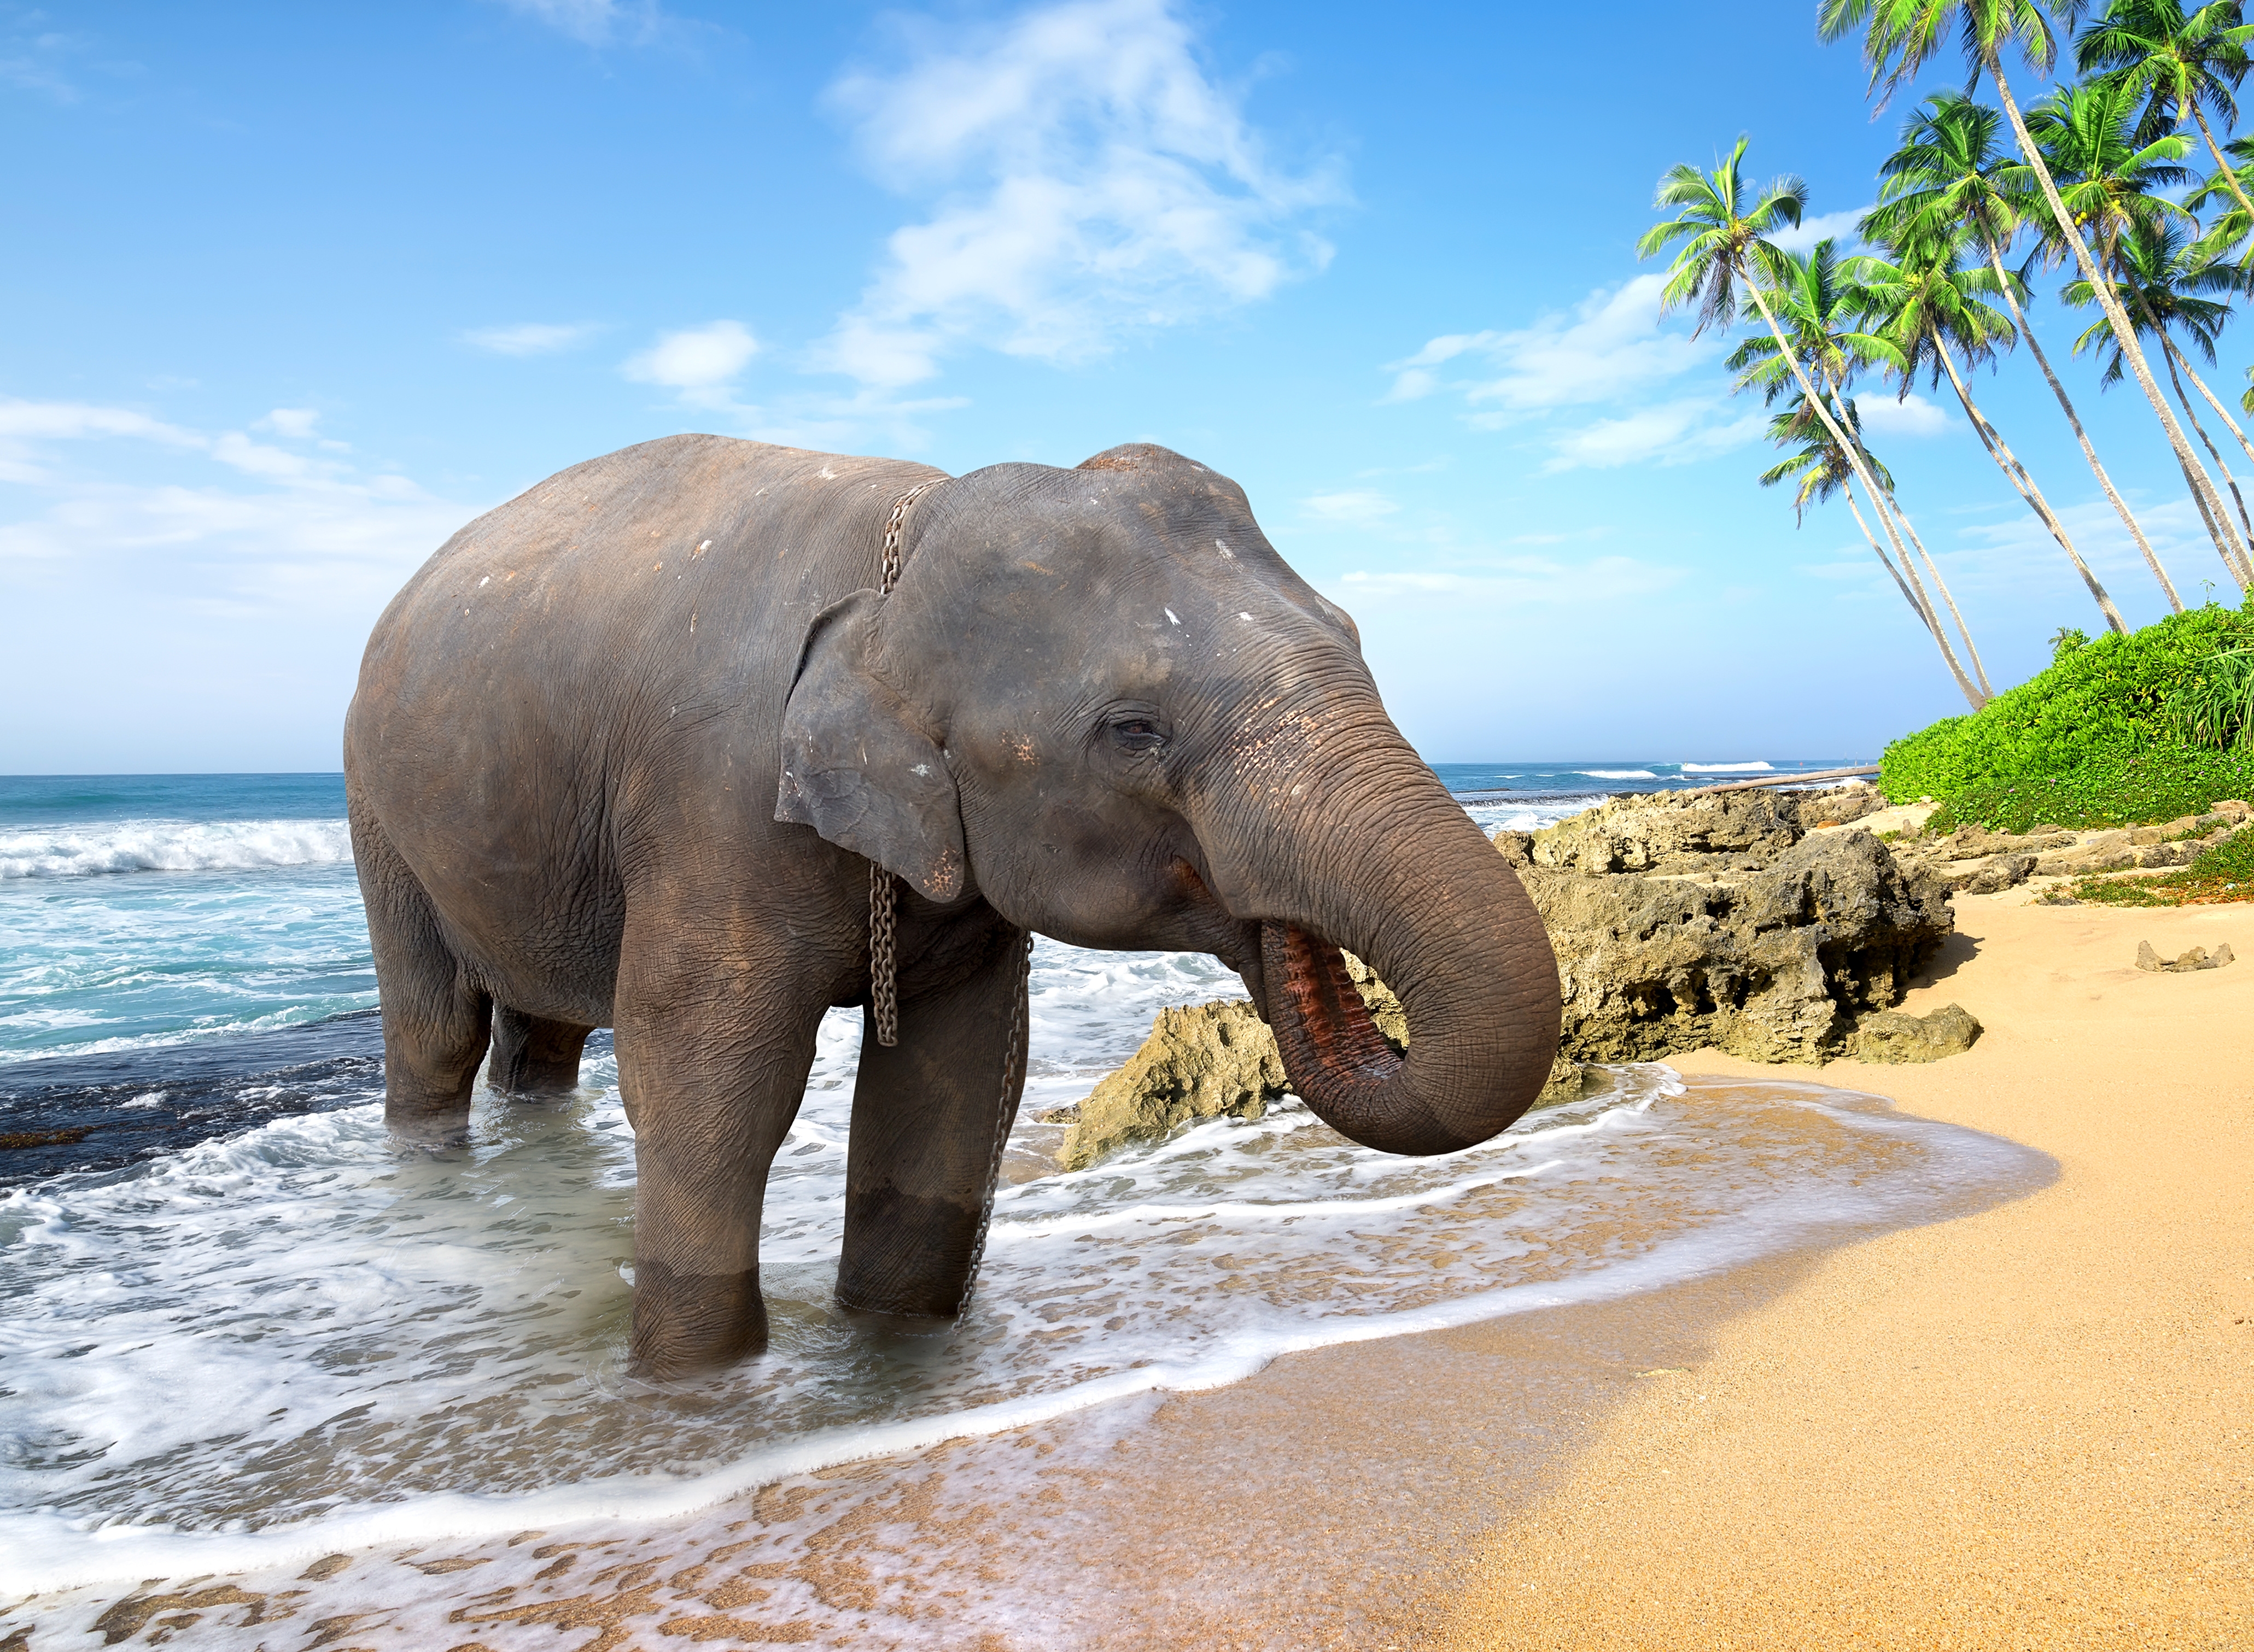 An elephant by the sea